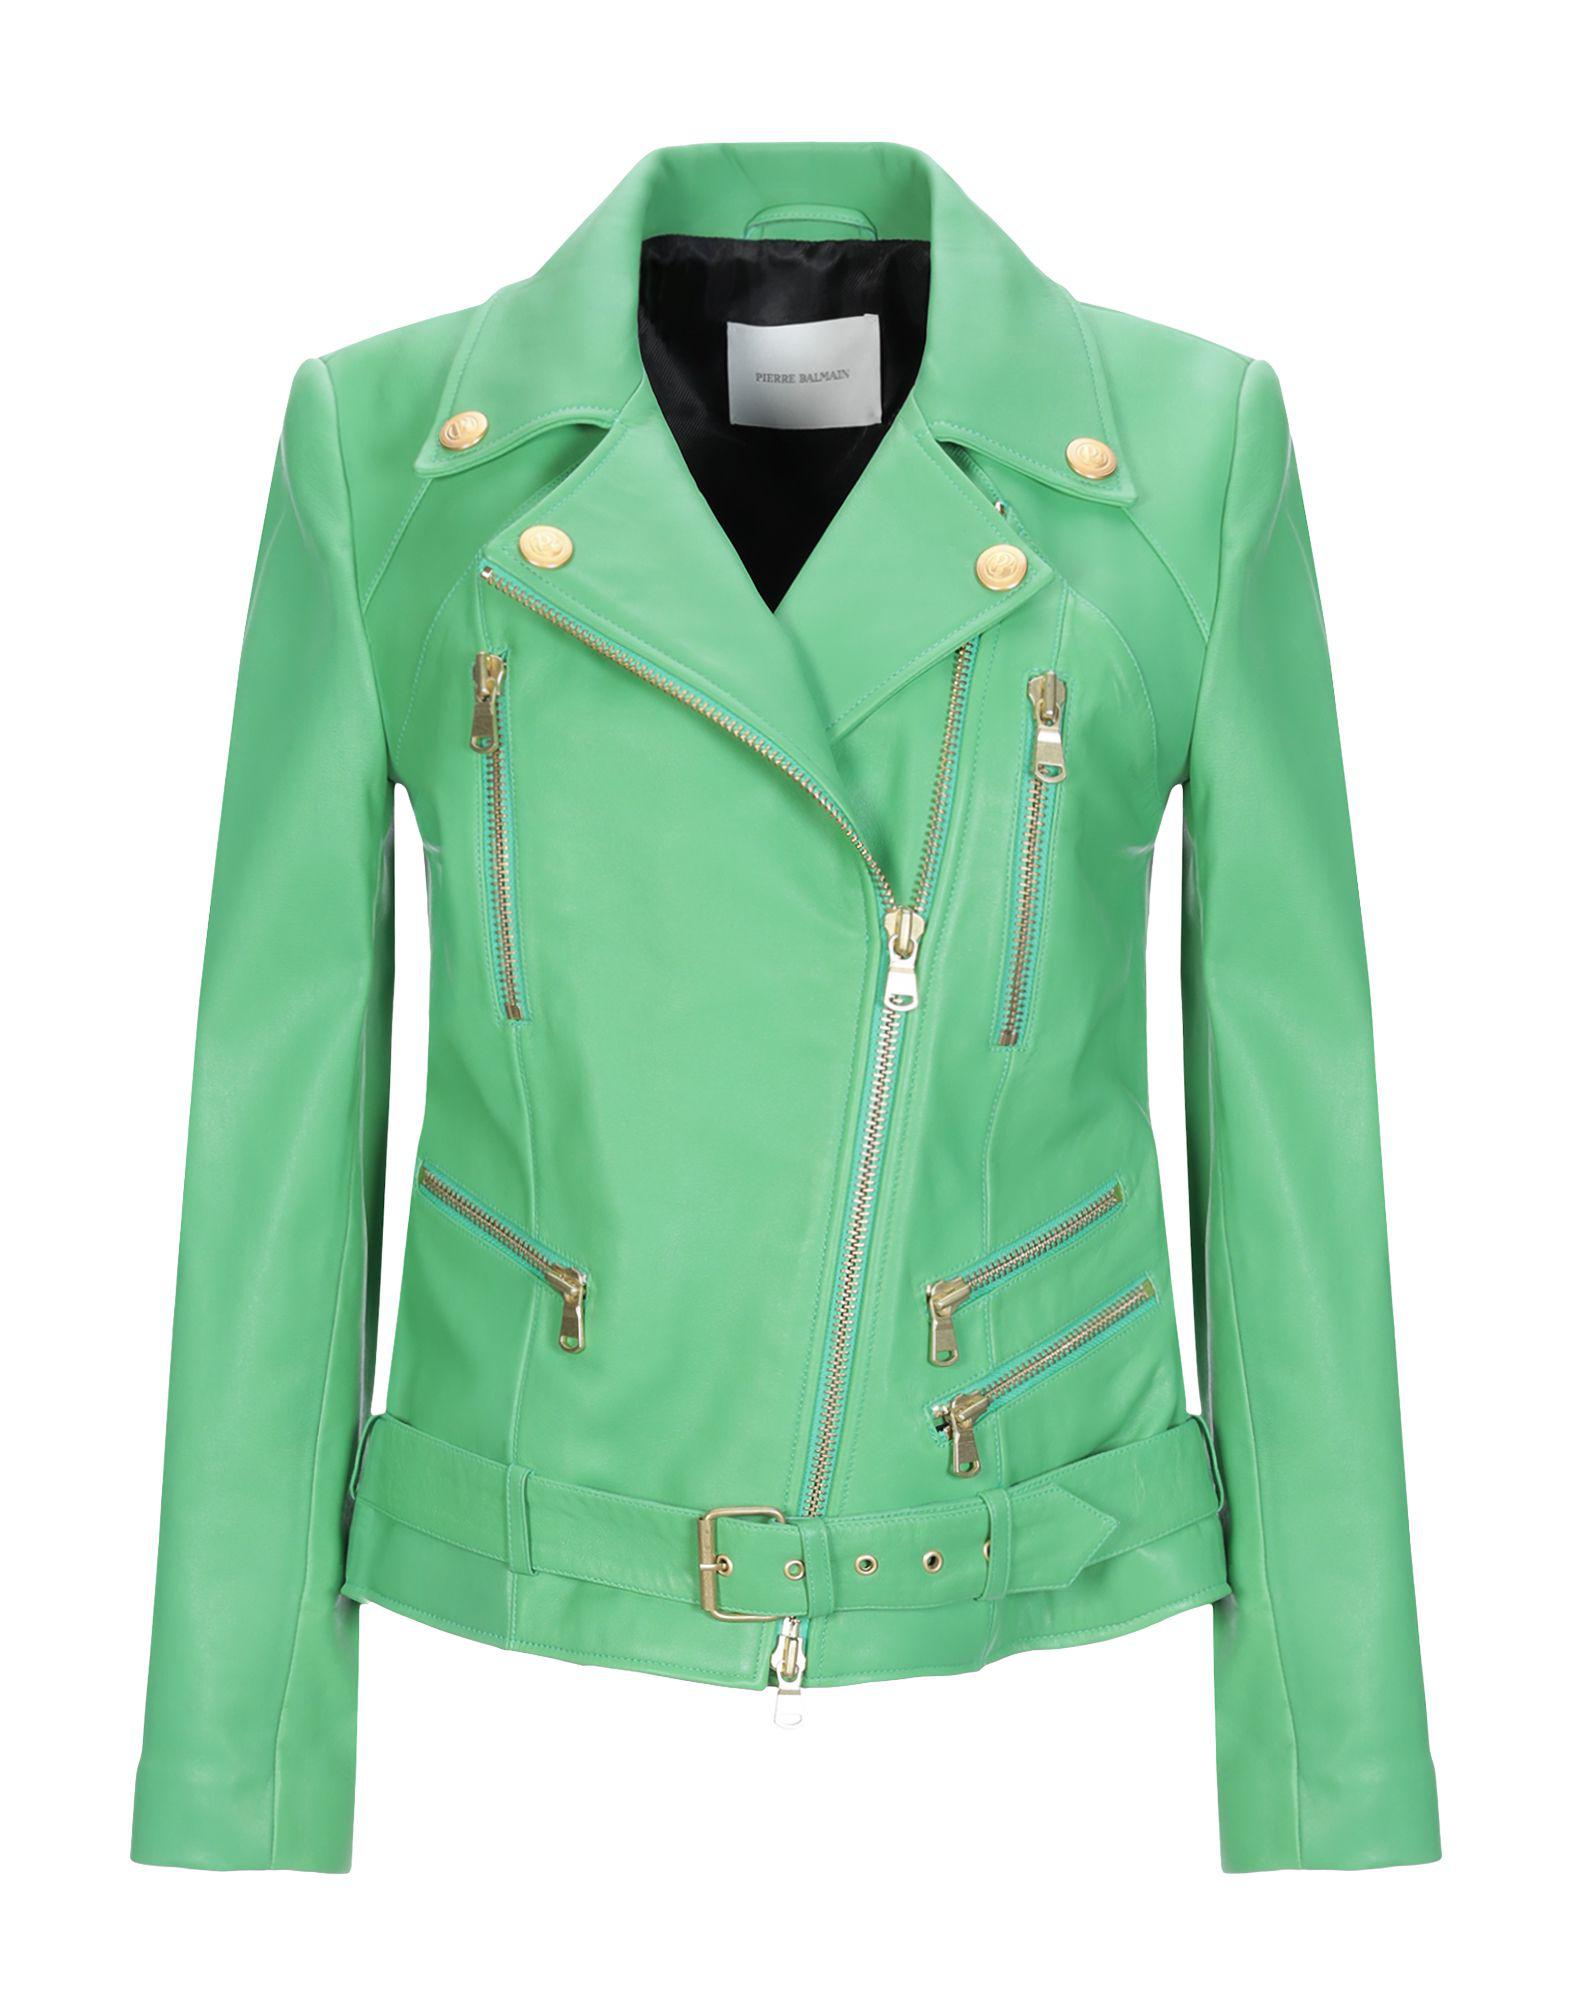 Balmain Leather Jacket in Green - Lyst